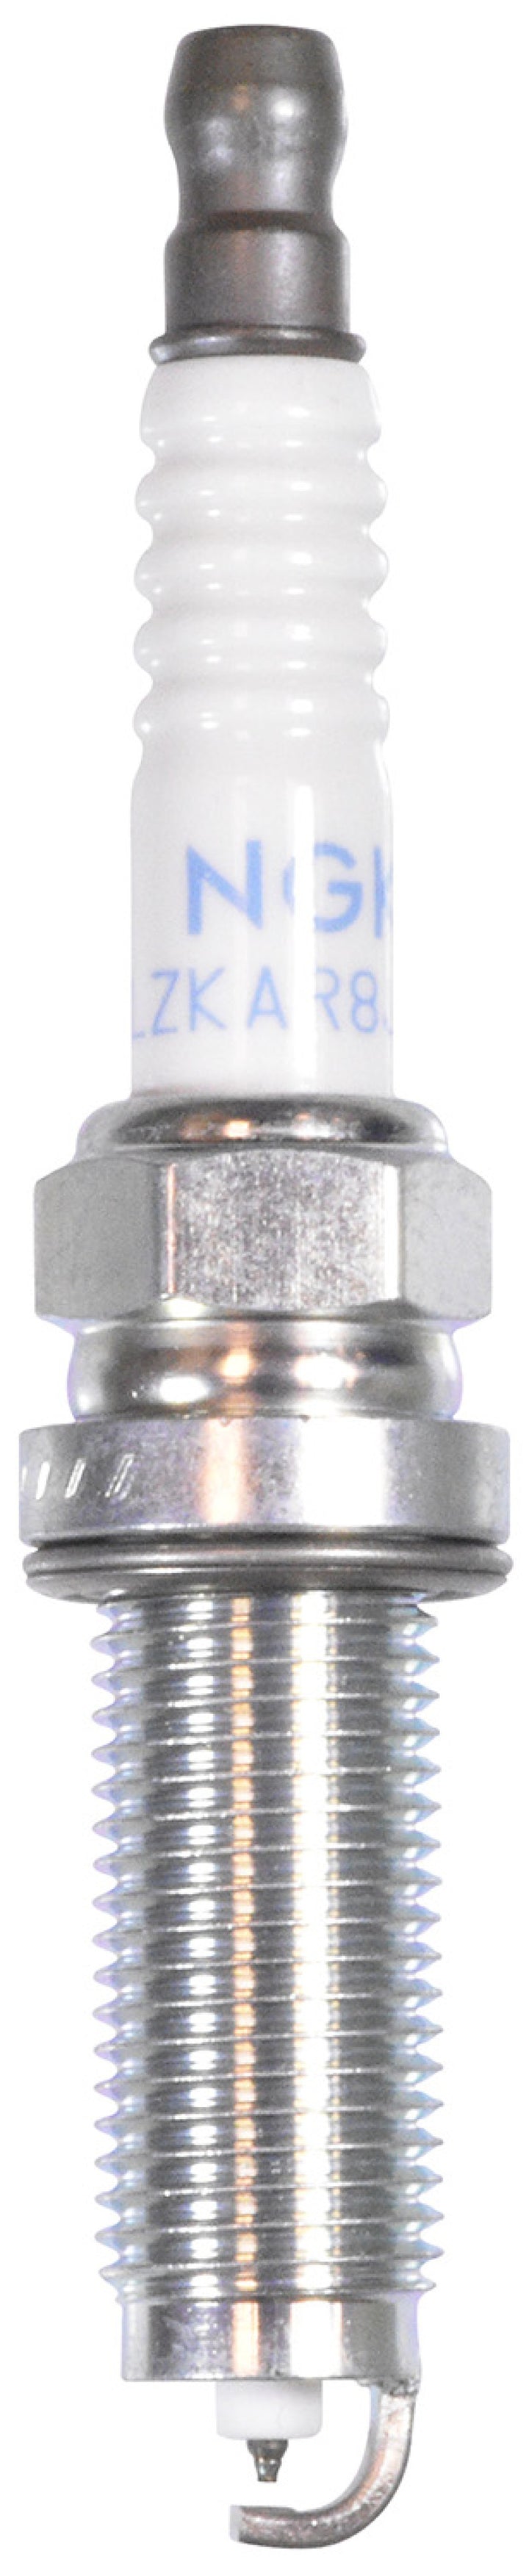 NGK Laser Iridium Spark Plug Box of 4 (ILZKAR8J8SY).